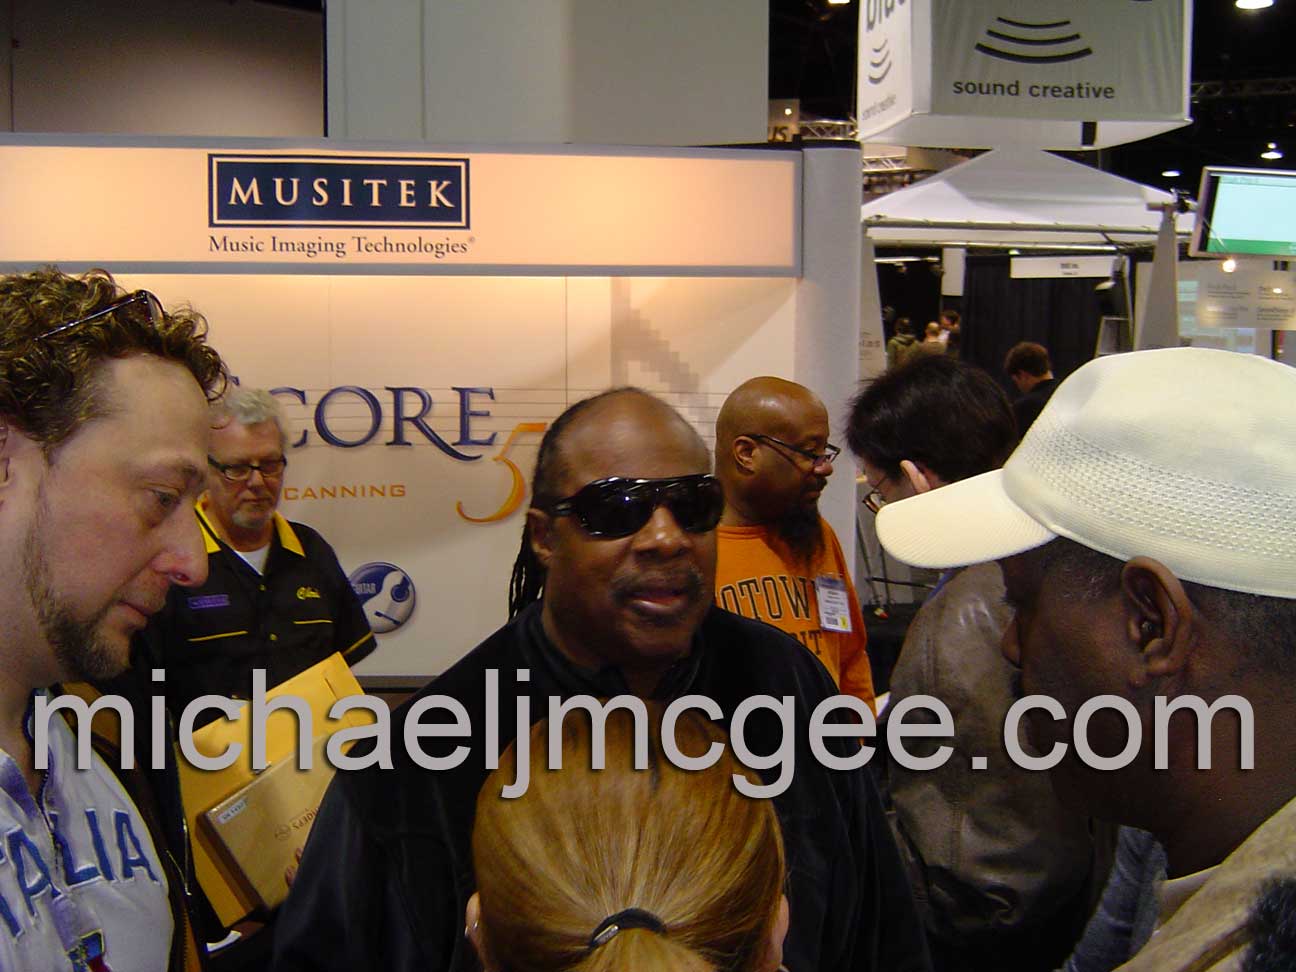 Stevie Wonder / michaeljmcgee.com